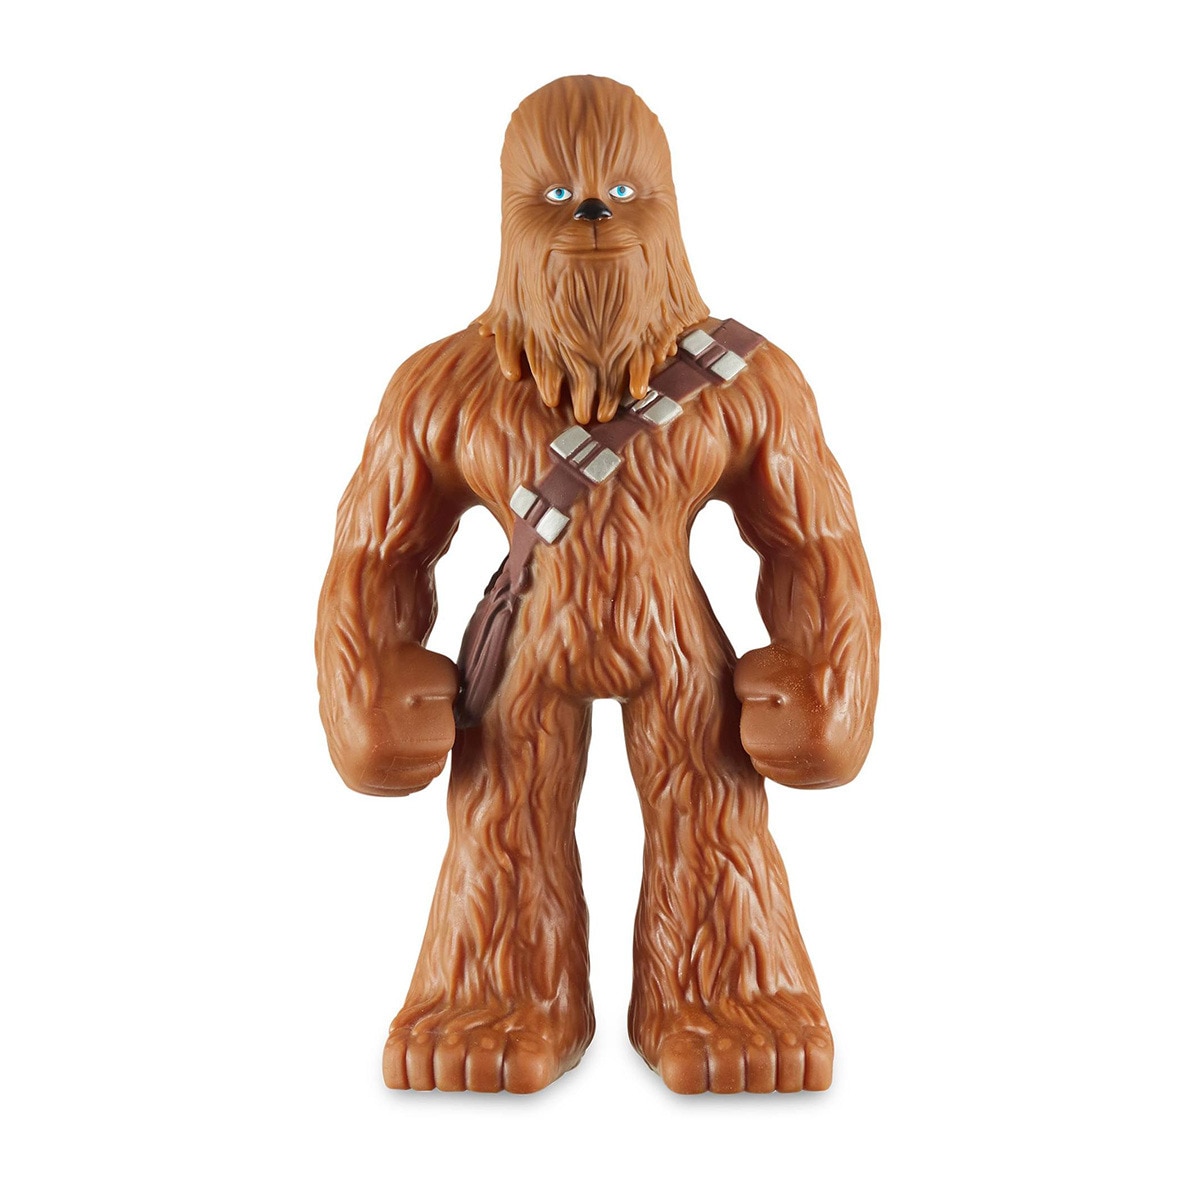 Famosa - Figura Extensible Stretch Star Wars Chewbacca